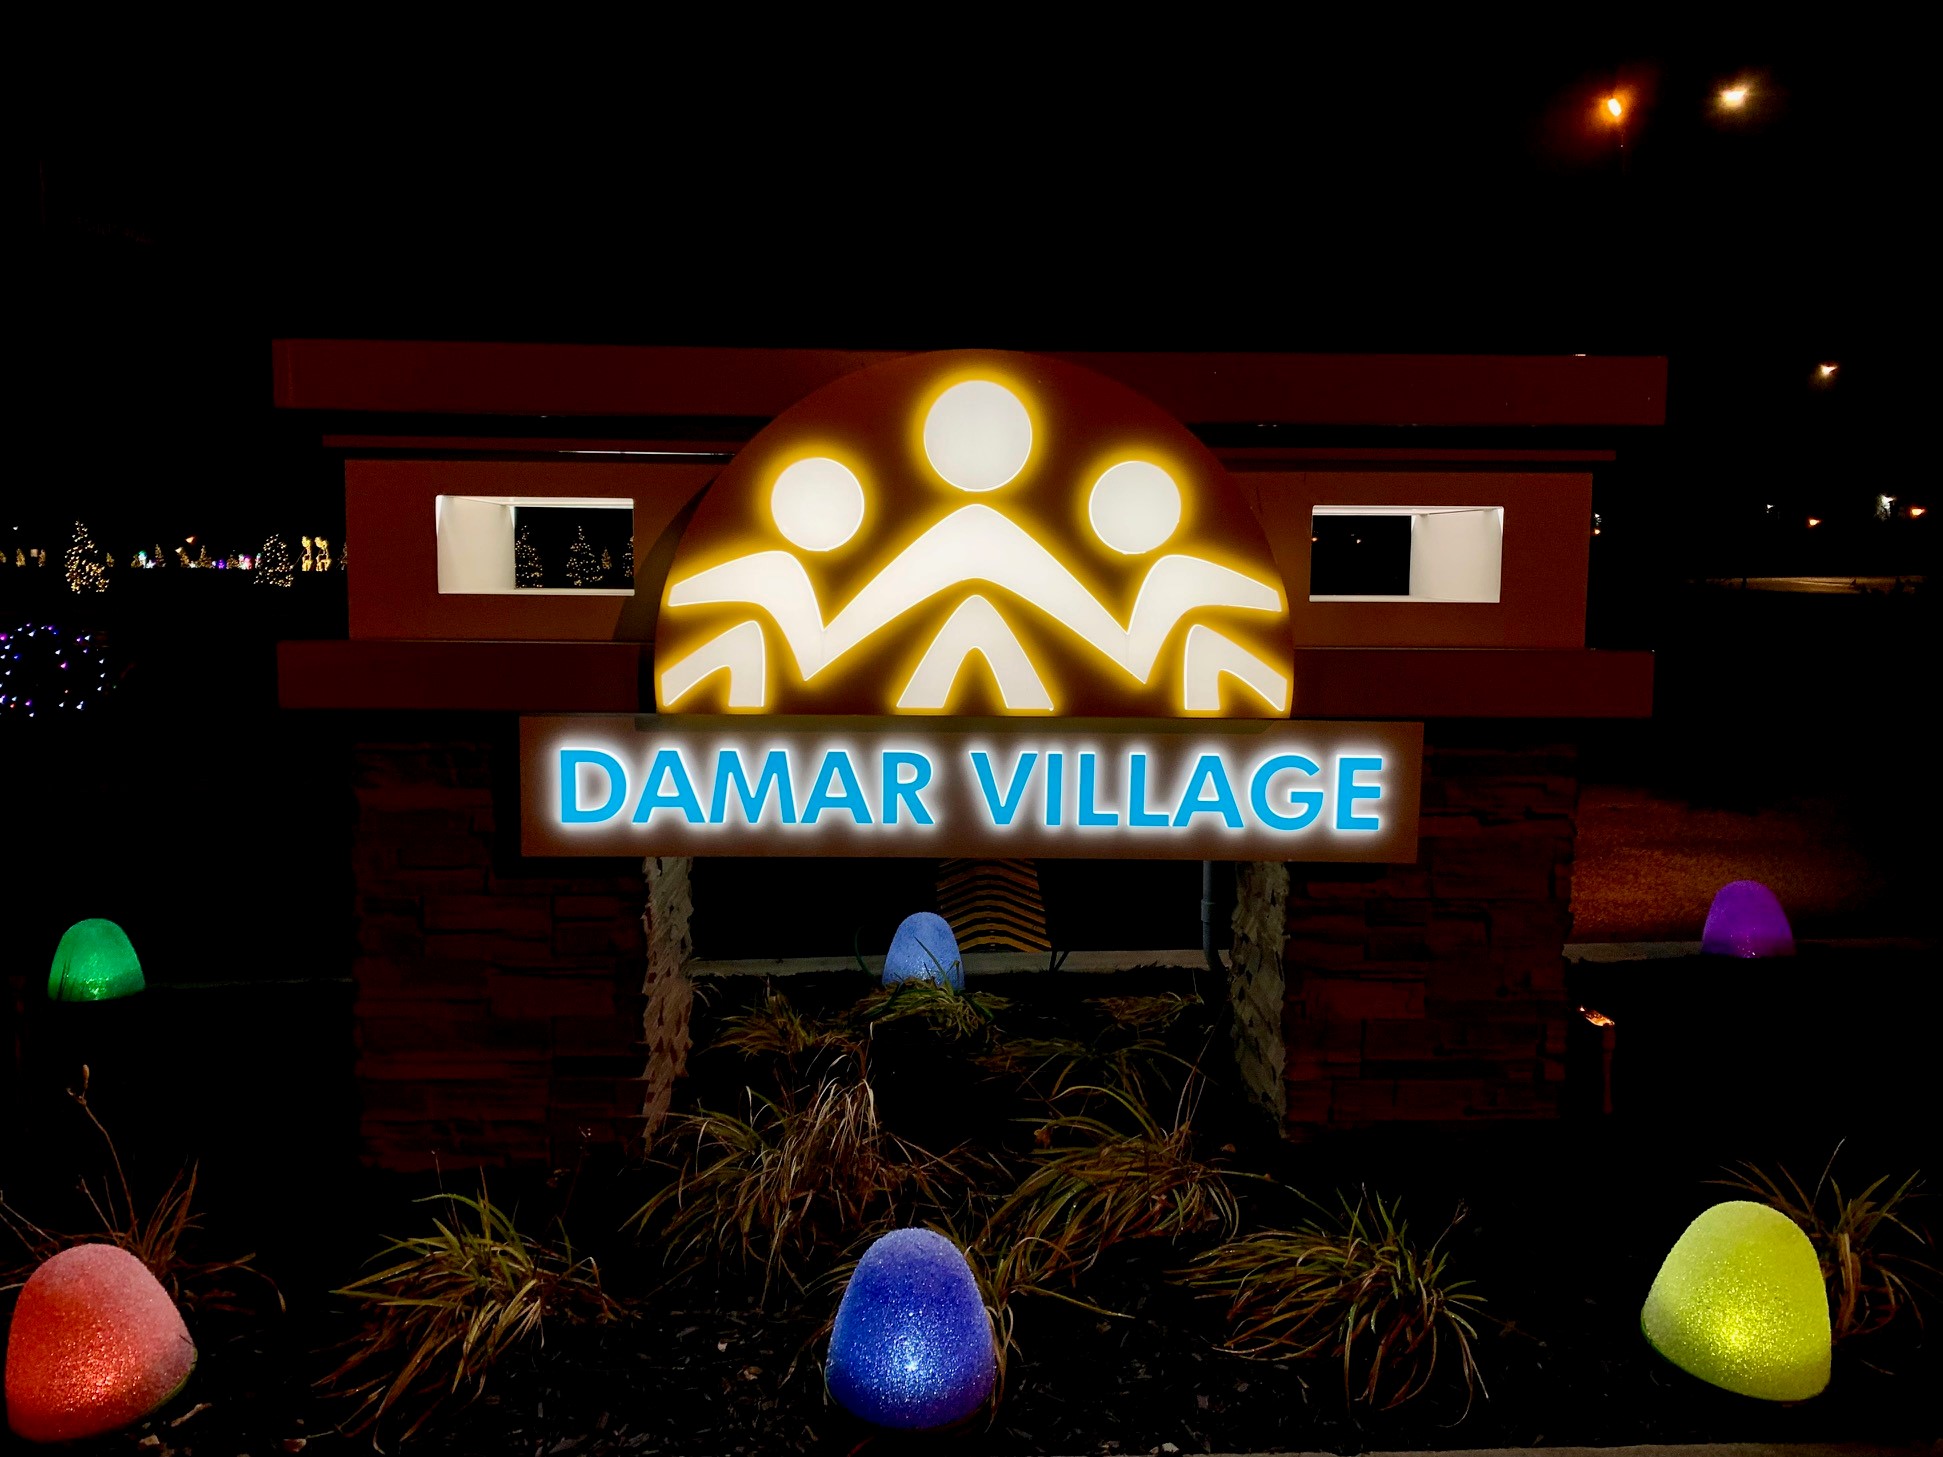 Damar Holiday Village events